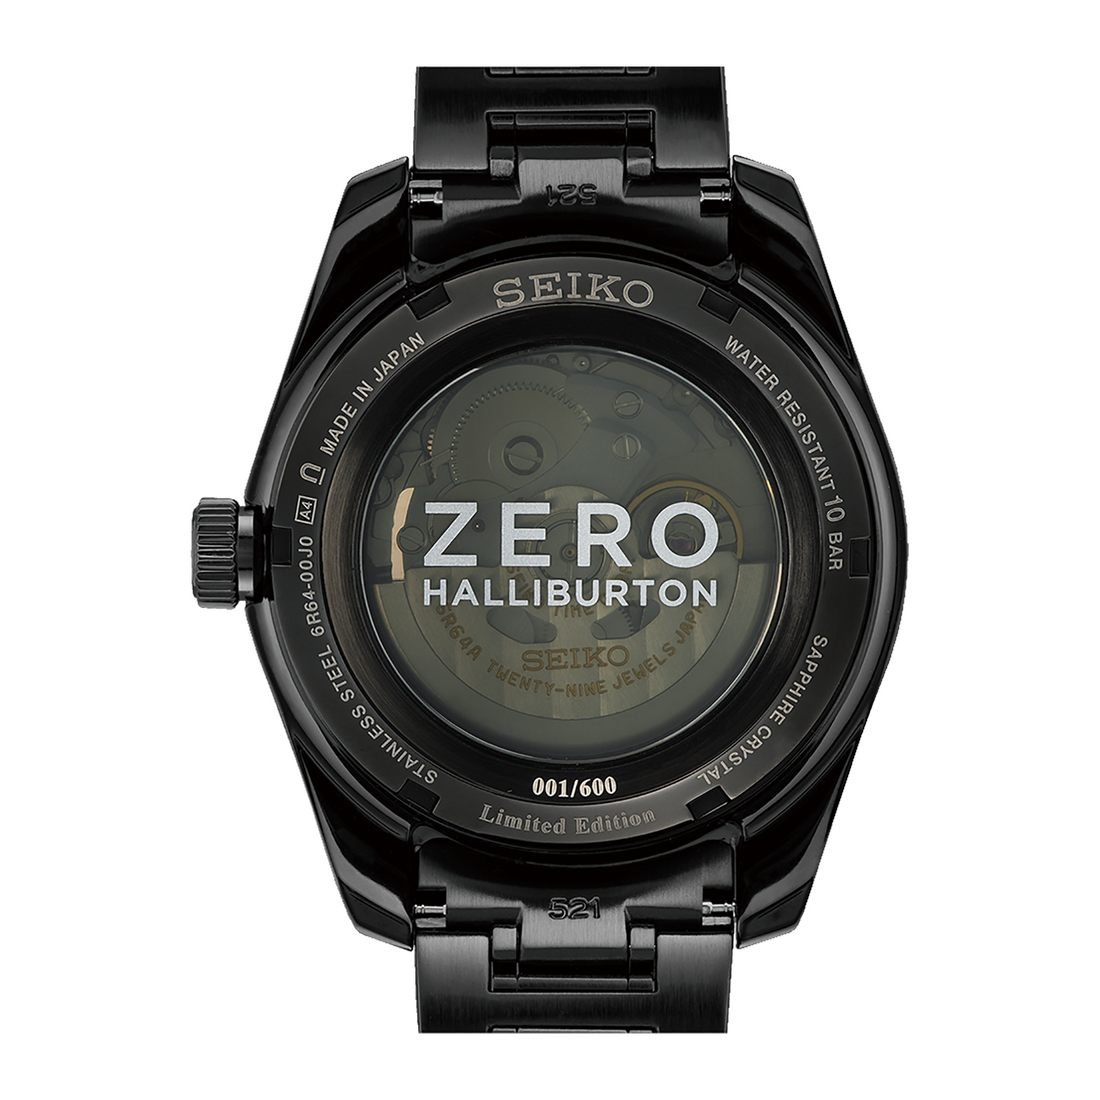 Seiko Presage SPB271 Sharp-Edged GMT Zero Halliburton Limited Edition Automatic Watch